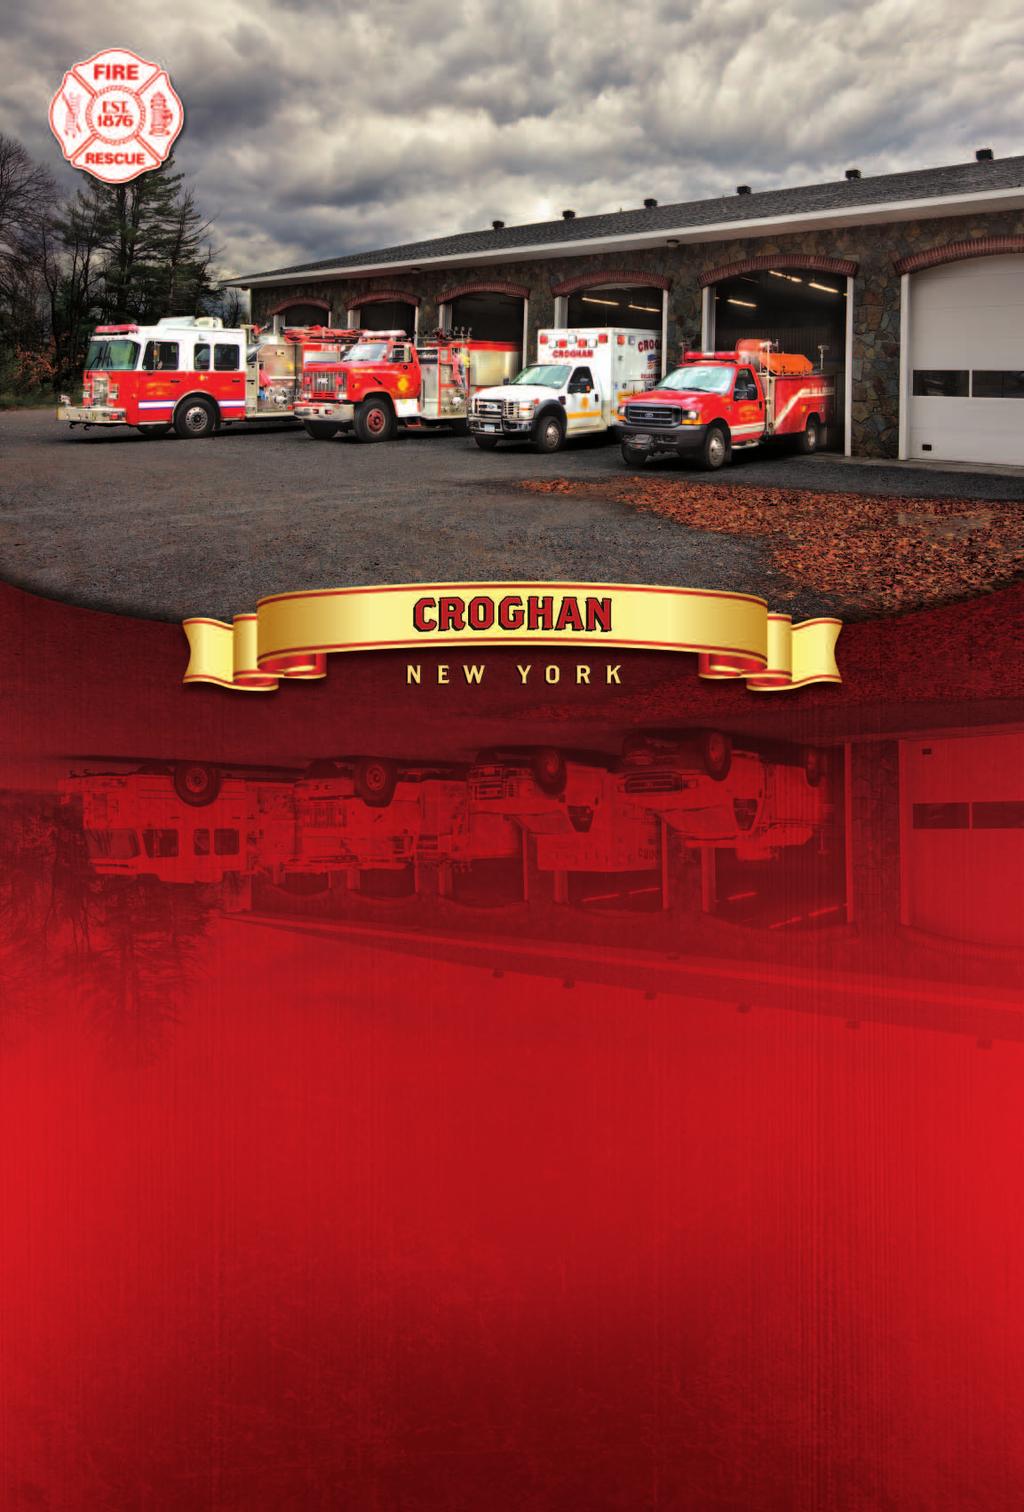 Croghan Volunteer Fire Department Proudly Serving the Croghan Community Since 1876 NOVEMBER OC TOBER 1 2 3 4 5 6 7 8 9 10 11 12 13 14 15 16 17 18 19 20 21 22 23 24 25 26 27 28 29 30 31 DECEMBER 1 2 3